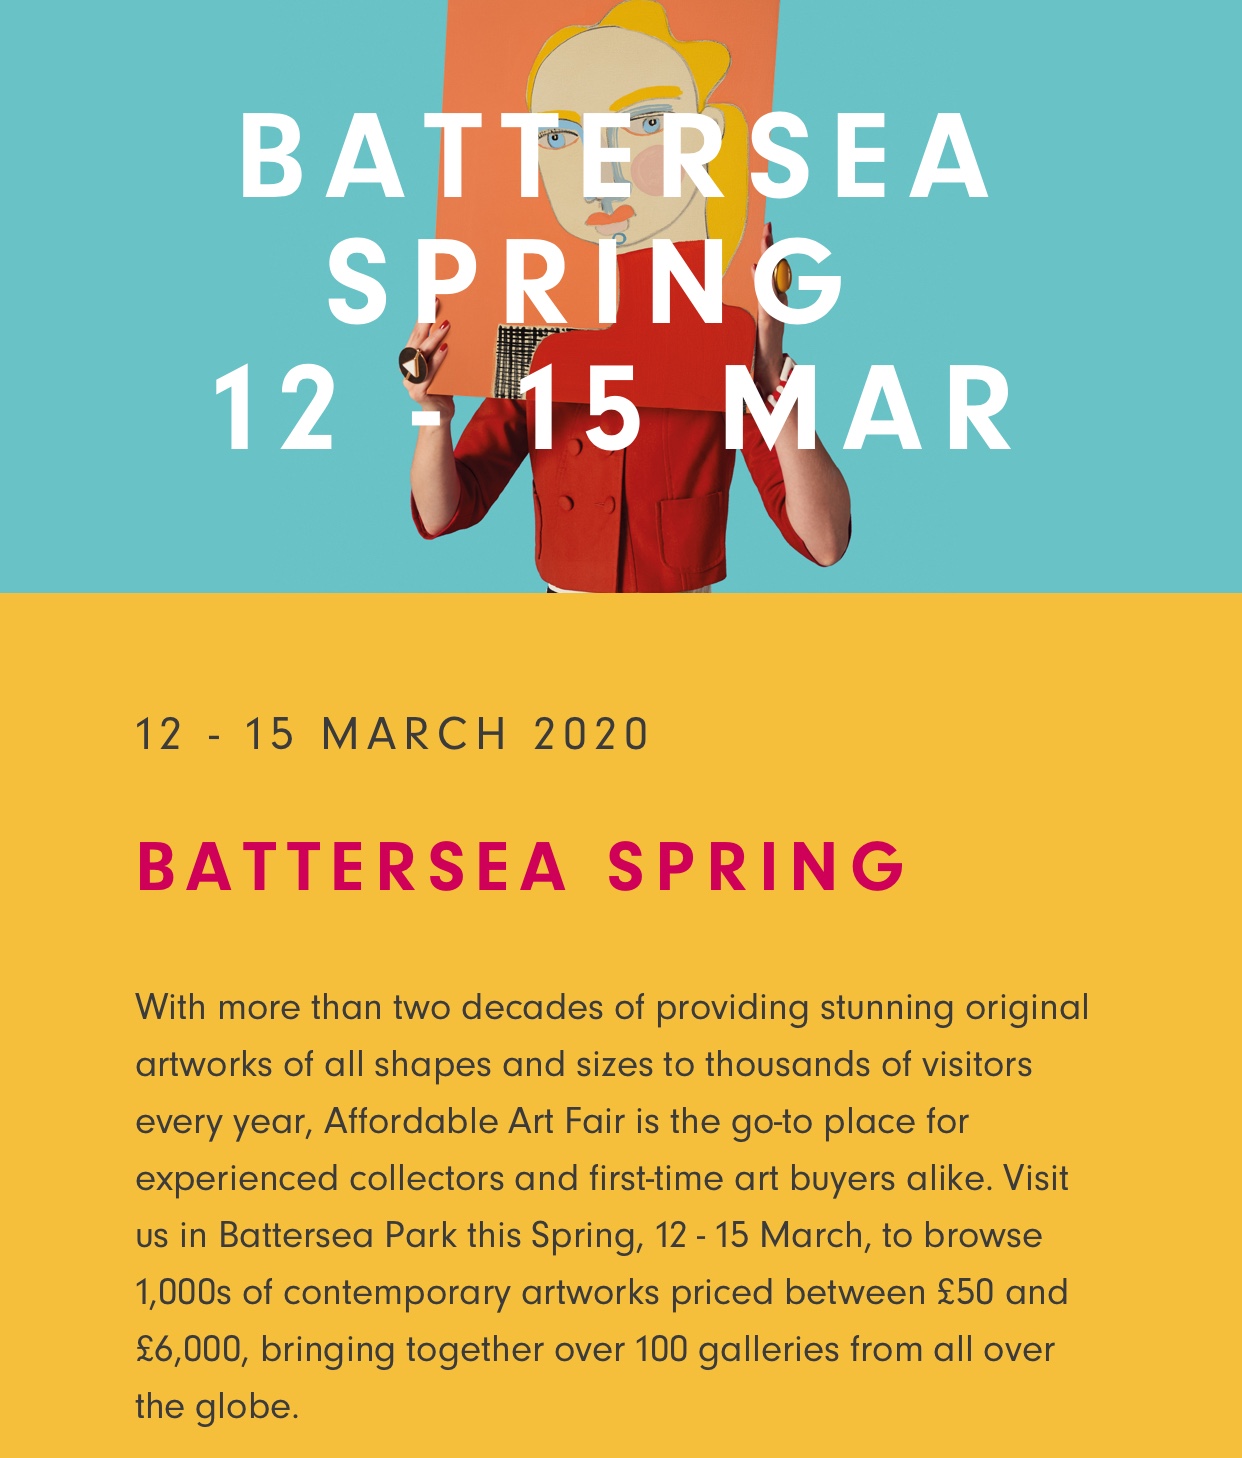 Affordable art fair Battersea 11-15 March 2020